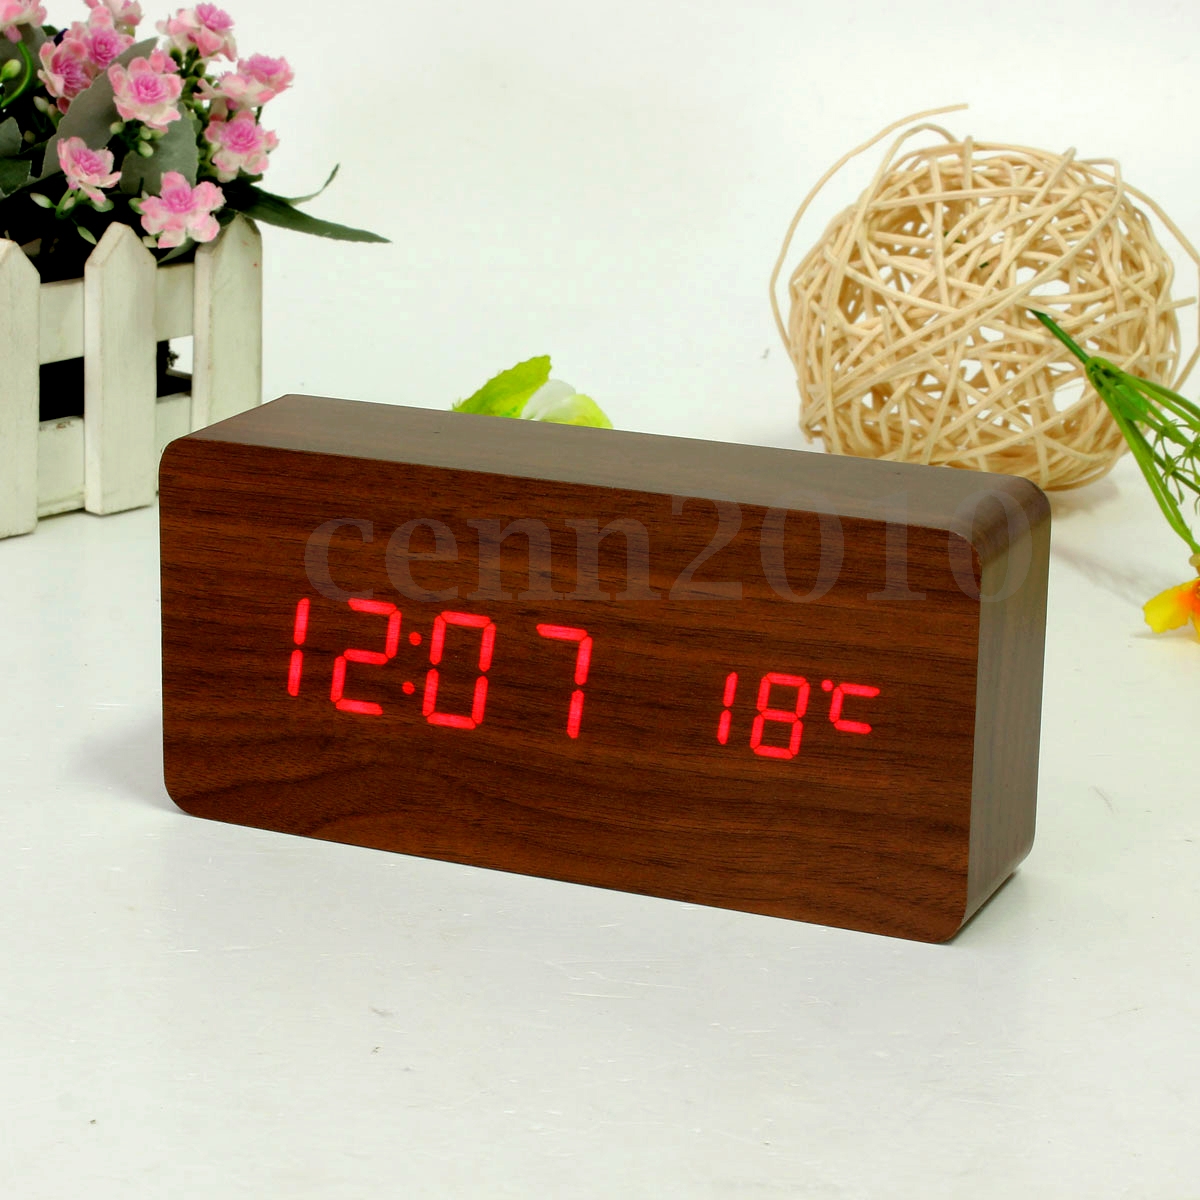 Digital LED Reveil Thermometre Horloge En Bois Alarme Clock Calendrier